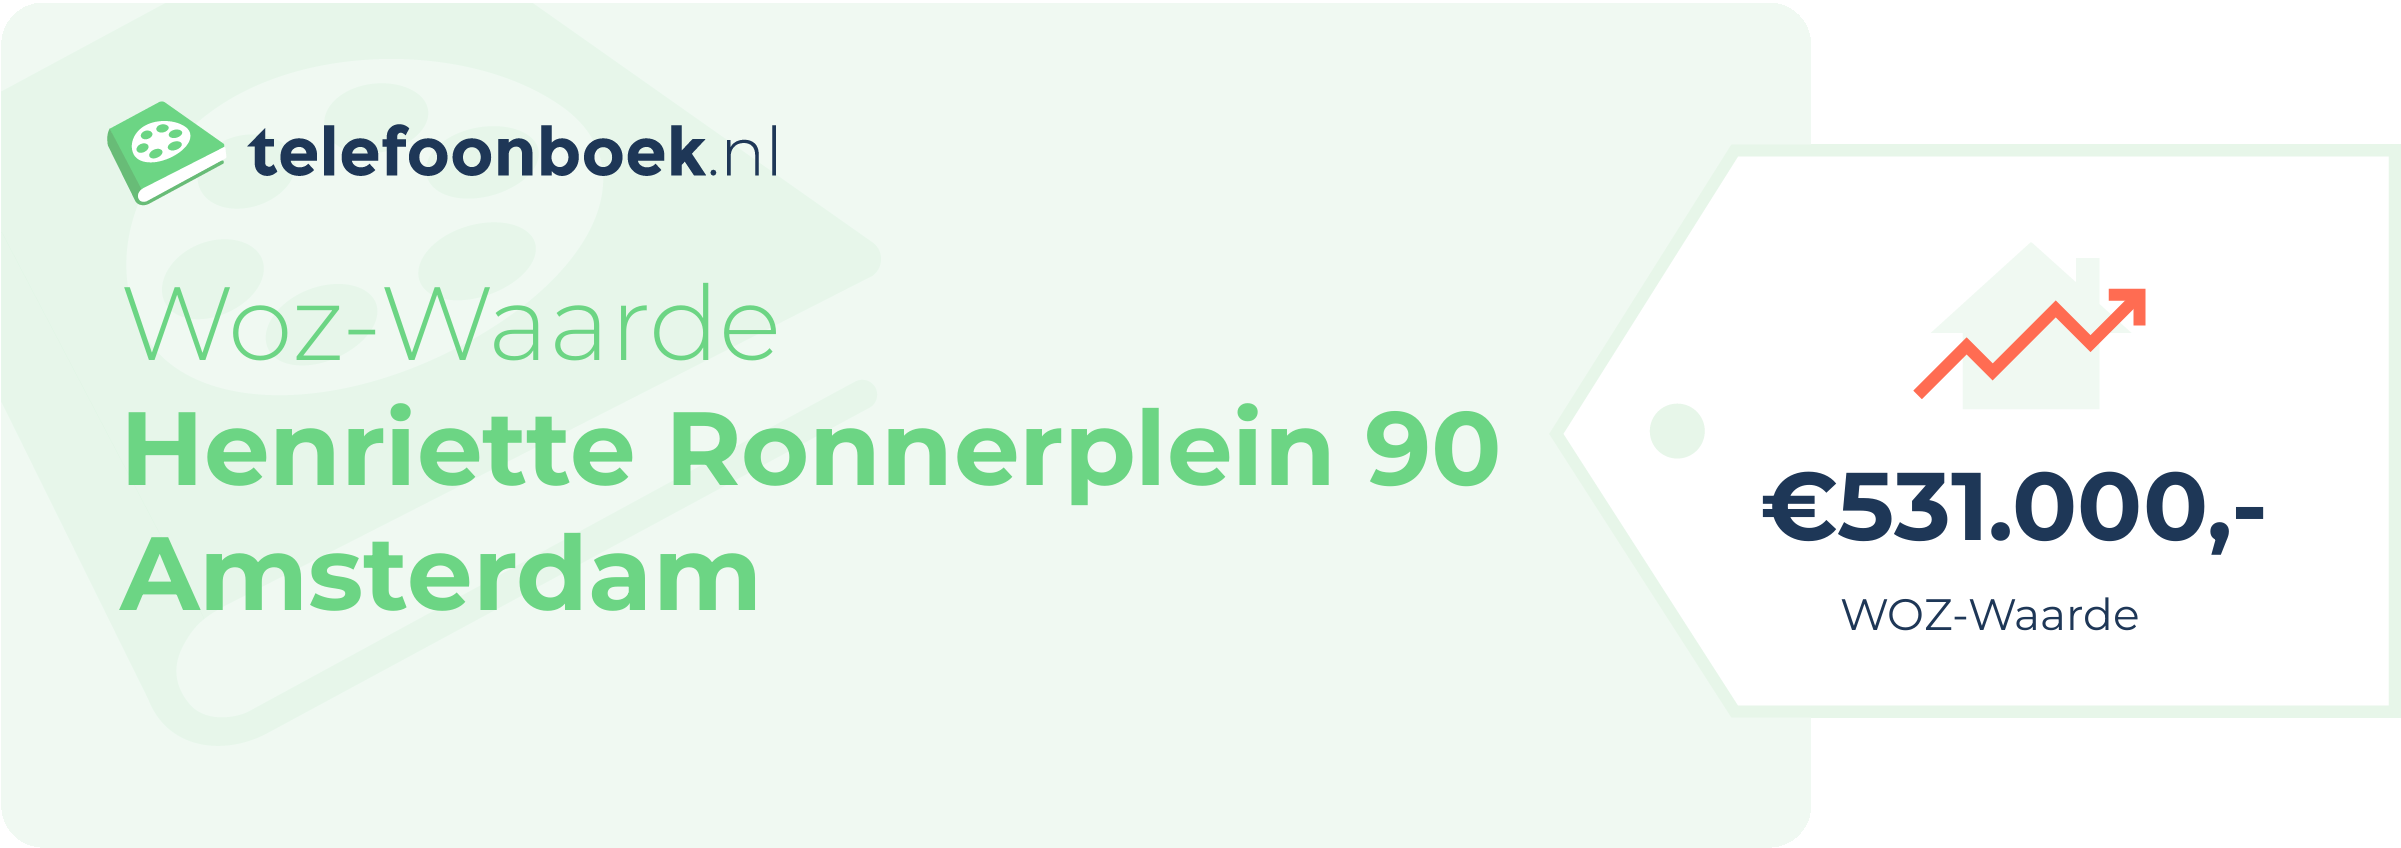 WOZ-waarde Henriette Ronnerplein 90 Amsterdam